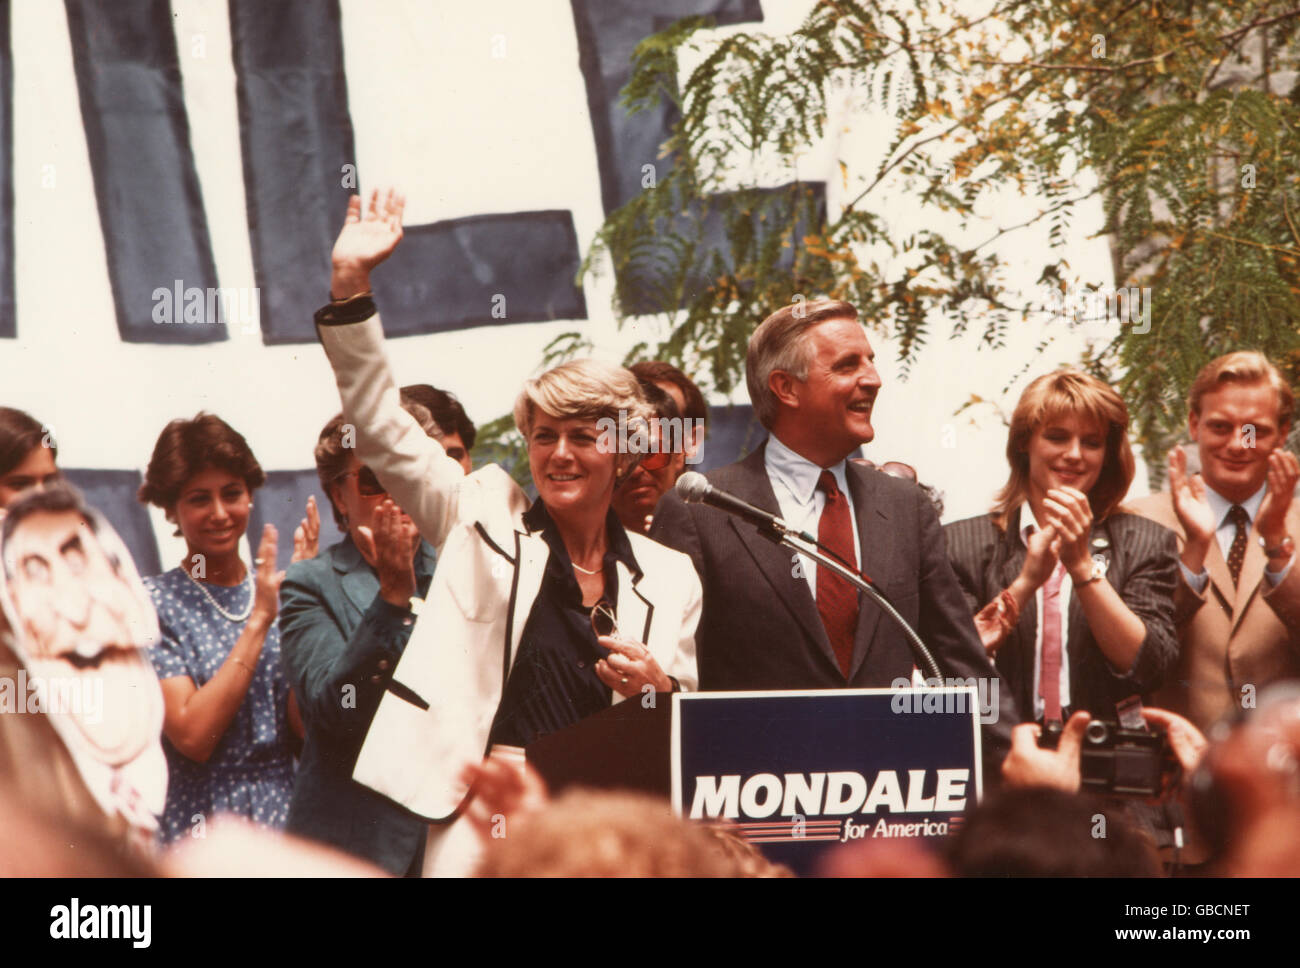 Democratic nominees for President and Vice-President - Walter Mondale (right) and Geraldine Ferraro (left). Stock Photo